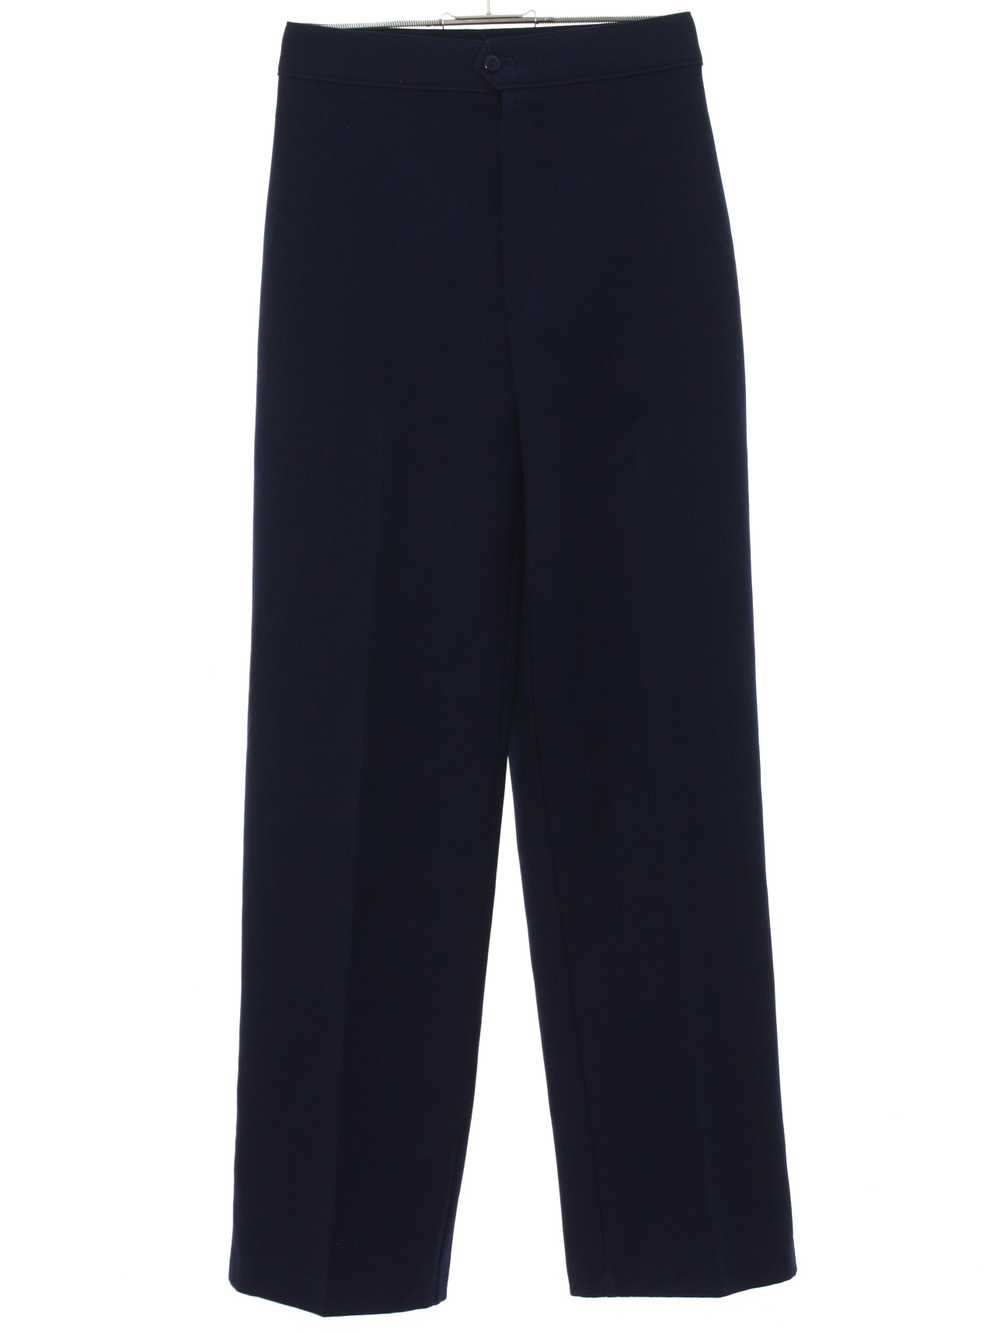 1980's Womens Dark Blue Knit Pants - image 1